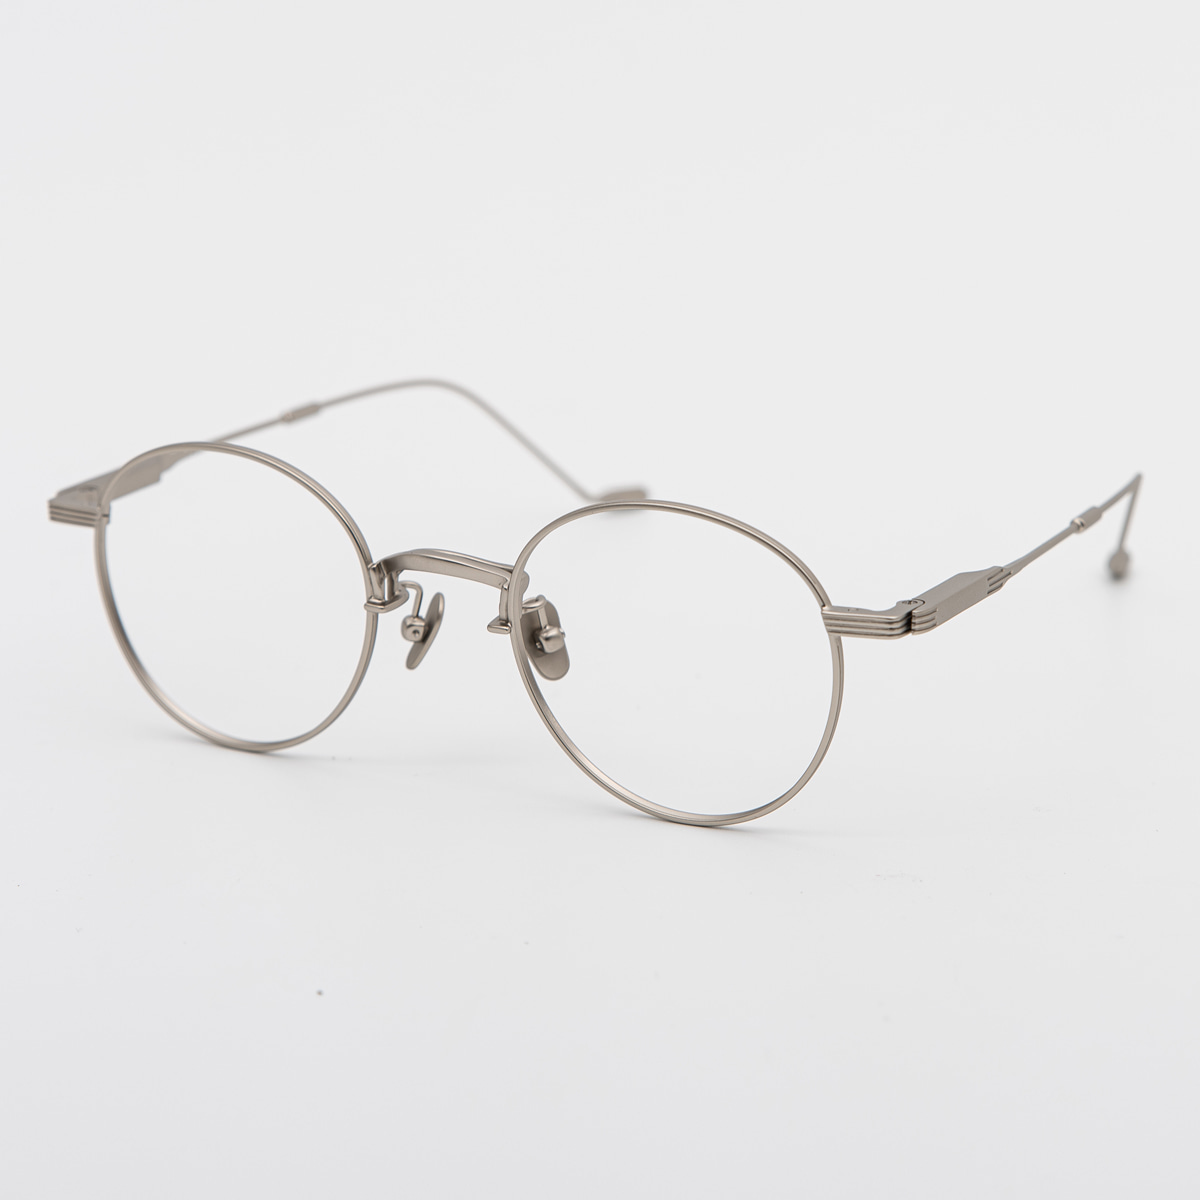 SBKA Grace-C02 동글이 안경